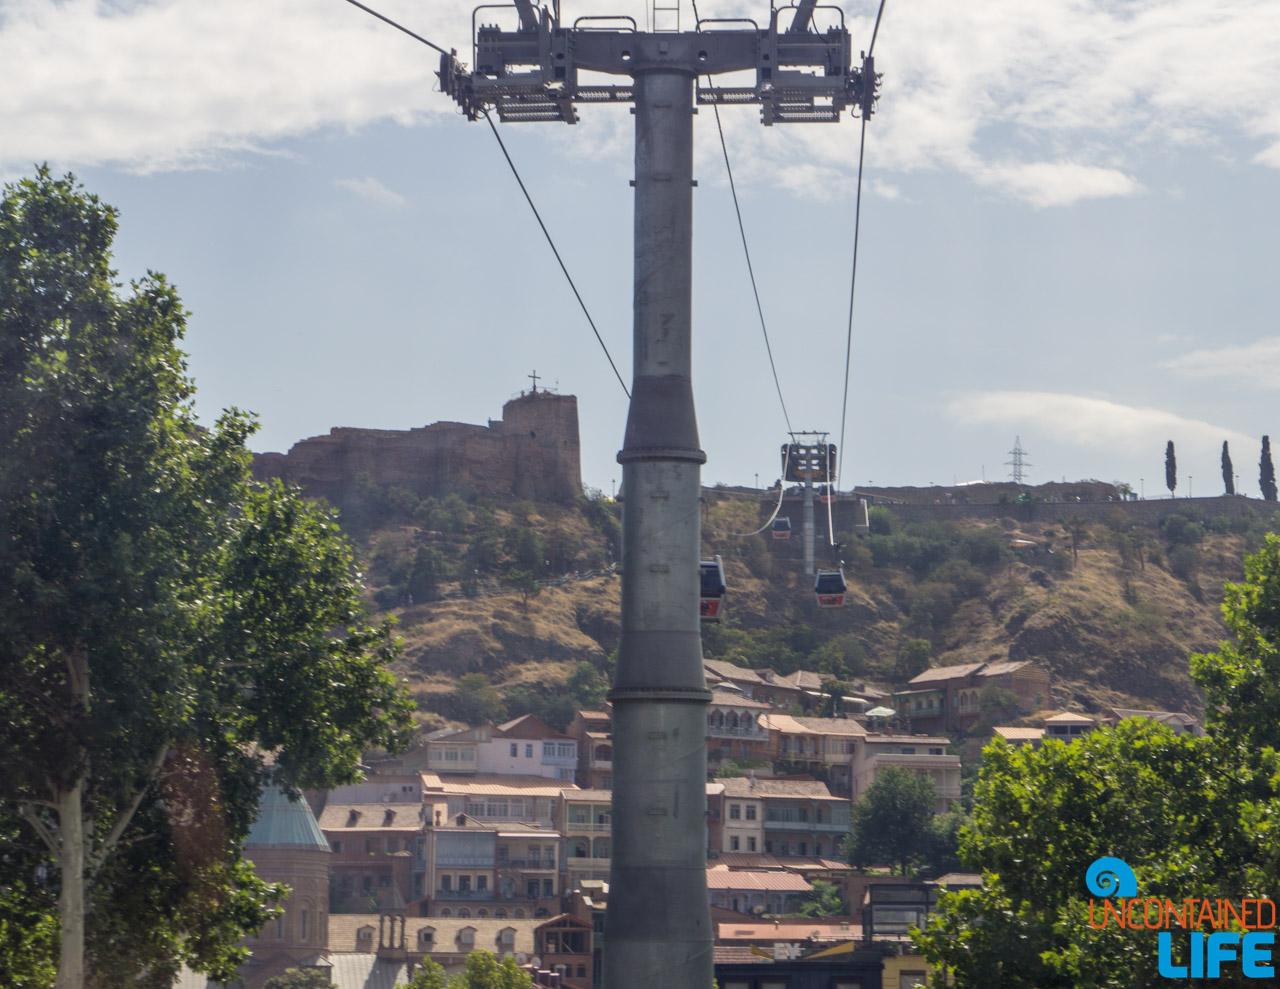 Air Tram, Narikala Fortress, Tbilisi, Georgia, Uncontained Life